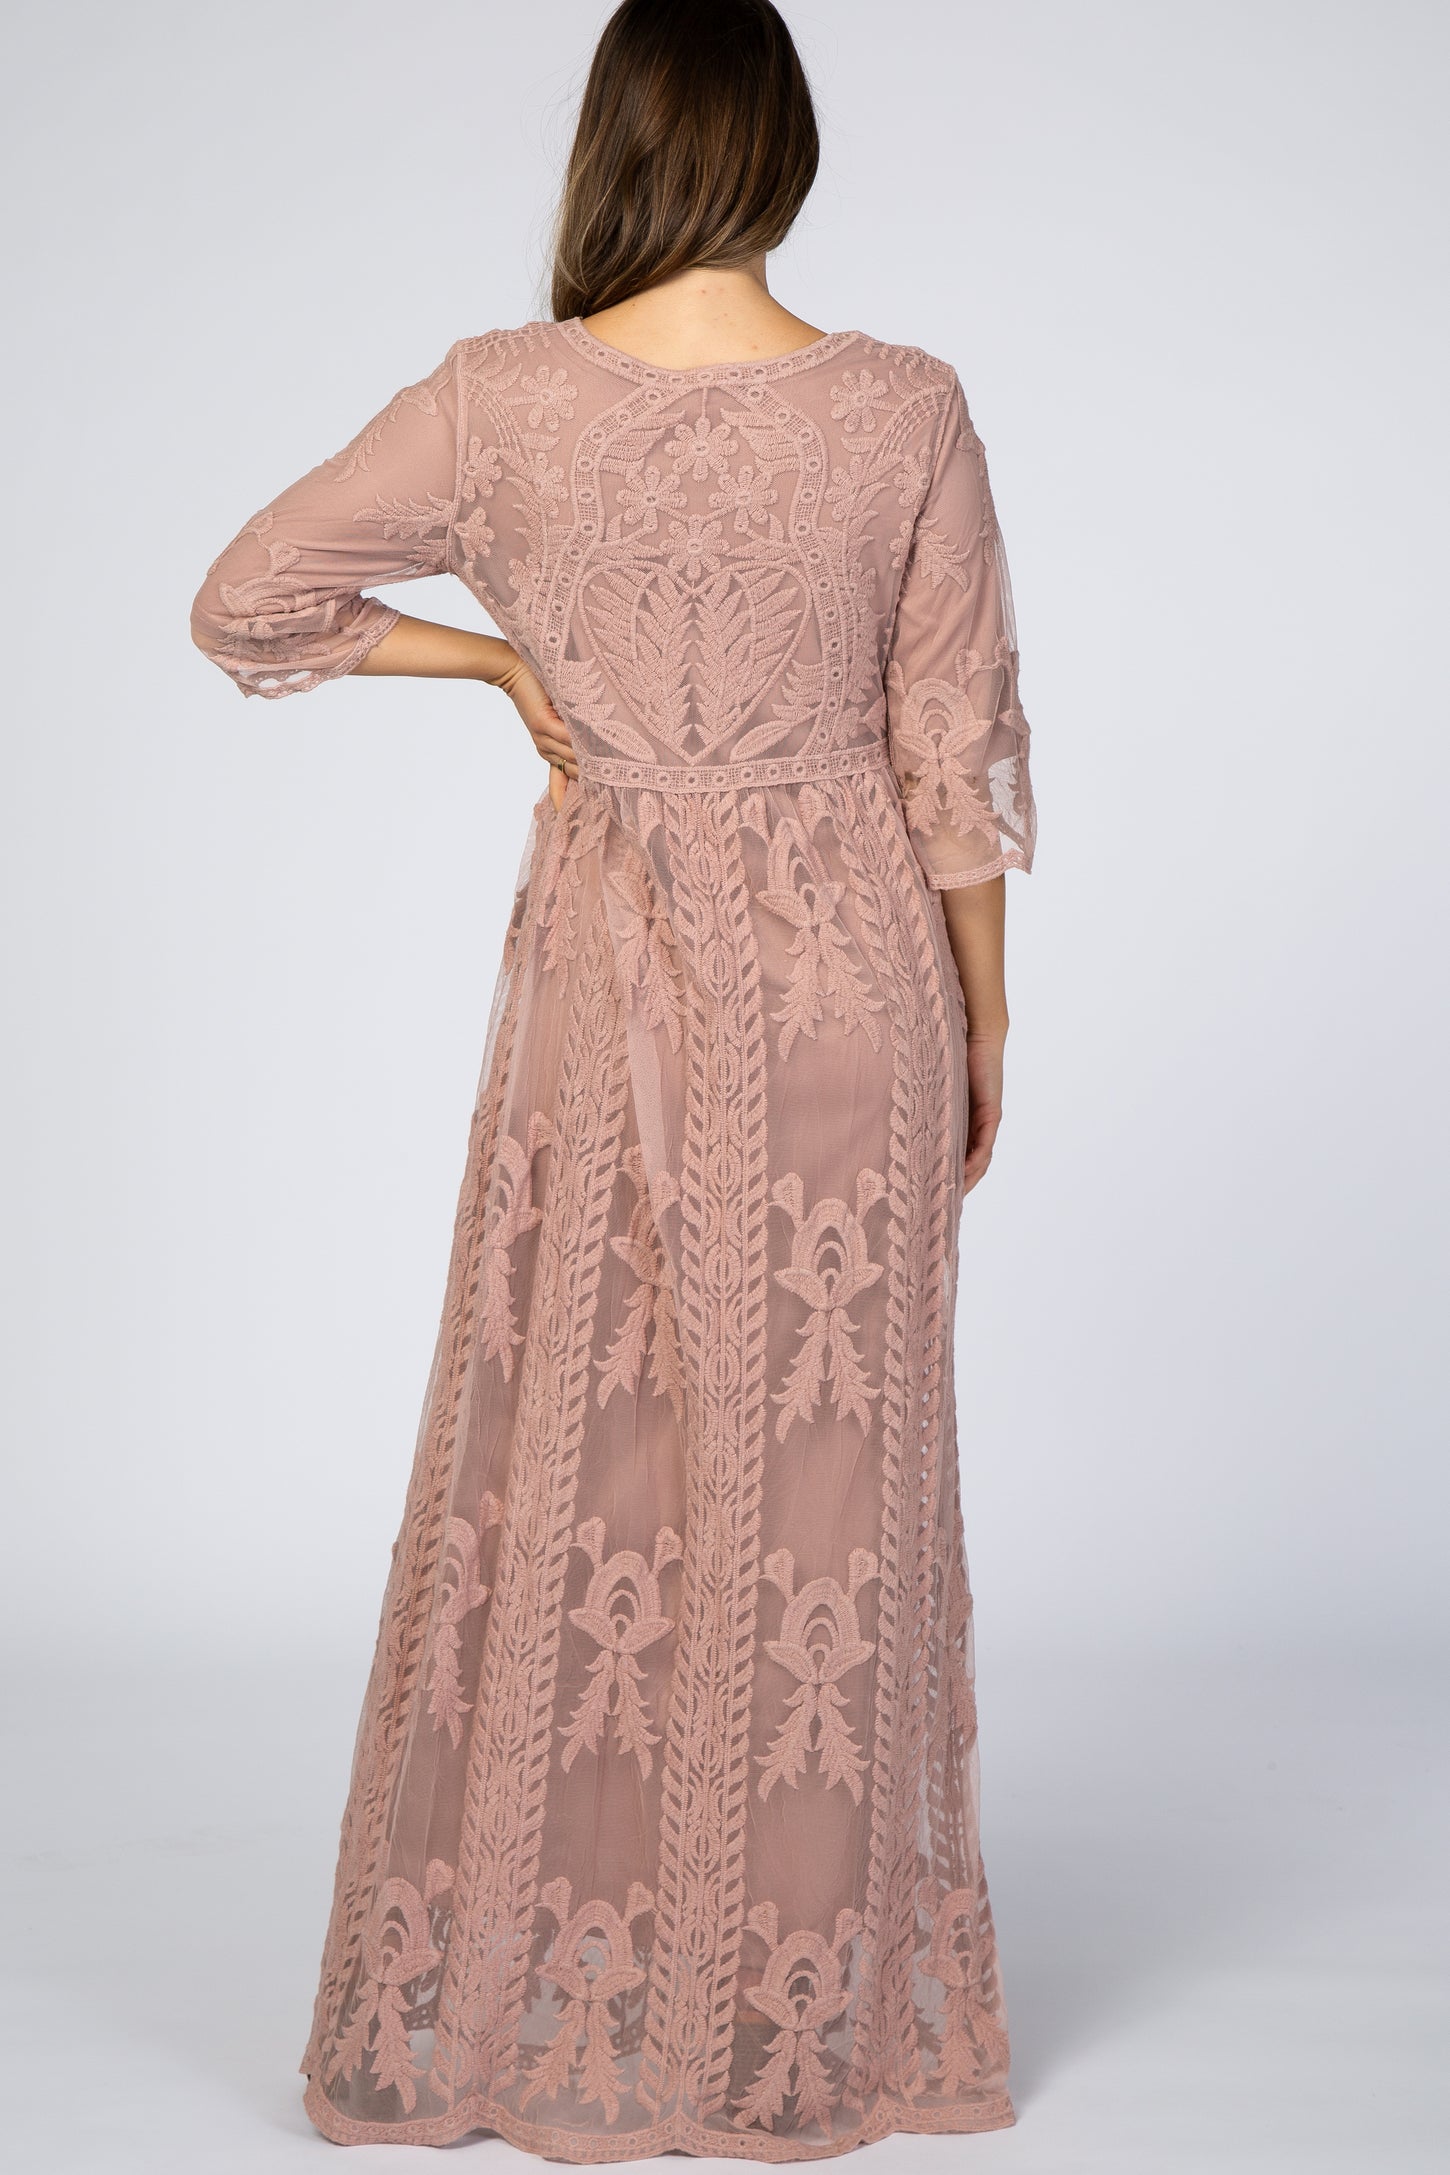 Light Pink Crochet Overlay Maternity Maxi Dress